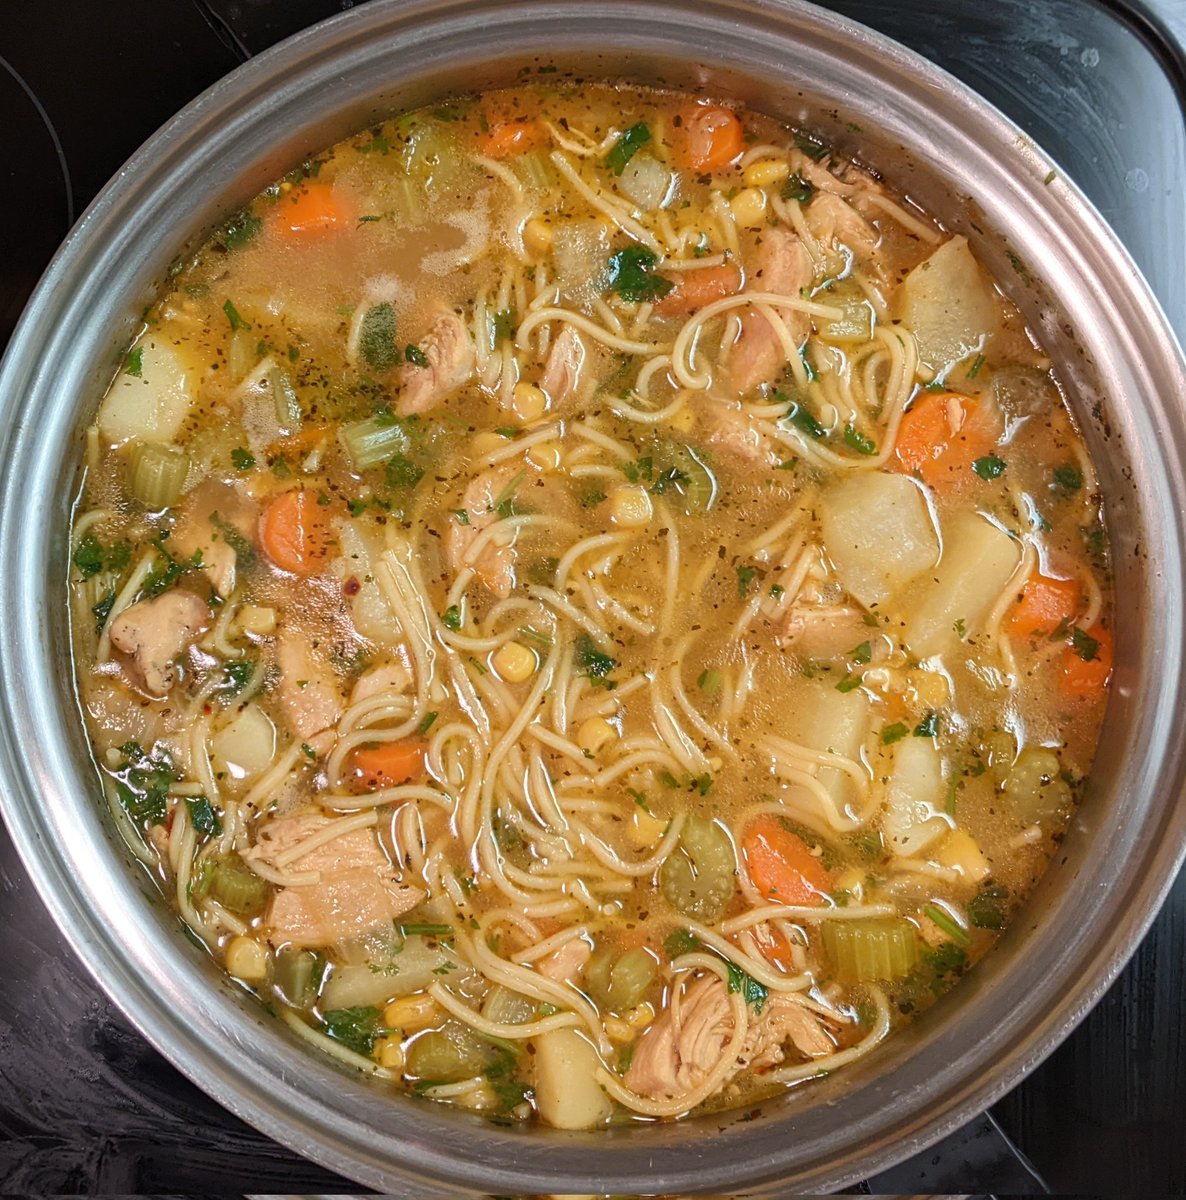 Fresh batch of Chicken Noodle Soup

#allkindsofrecipes #testkitchen #chickennoodlesoup #chickennoodle #chickensoup #soup #soupseason #chicken #fideos #noodles #onions #carrots #celery #garlic #corn #potatoes #cilantro